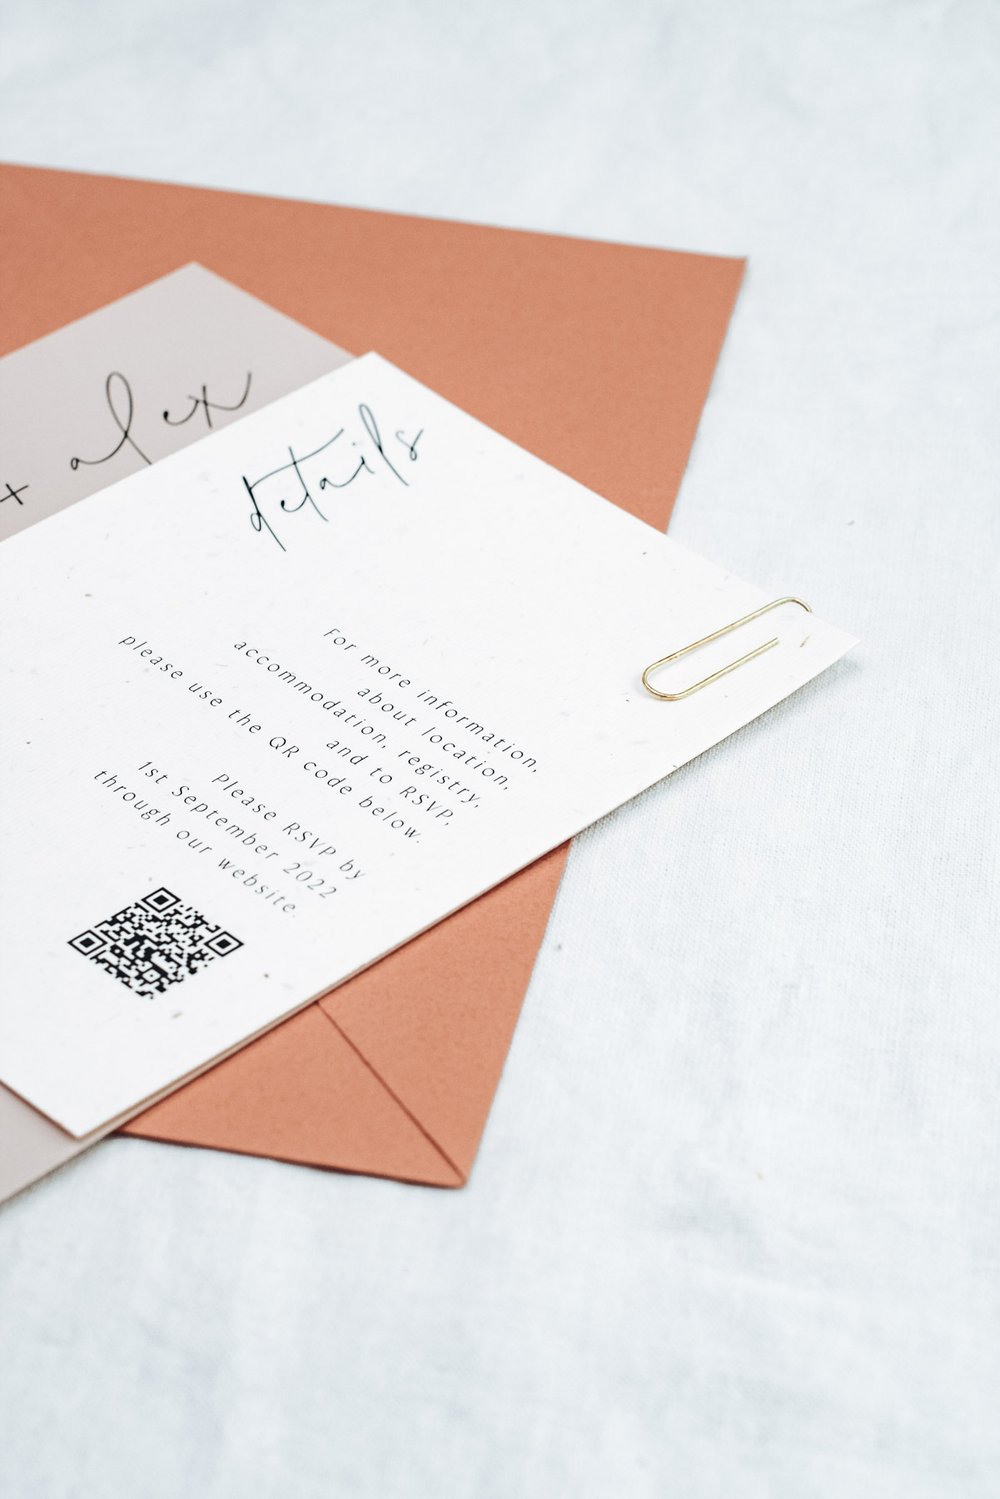 Wedding Invitation Accessories] 10 golden drop-shaped paper clips